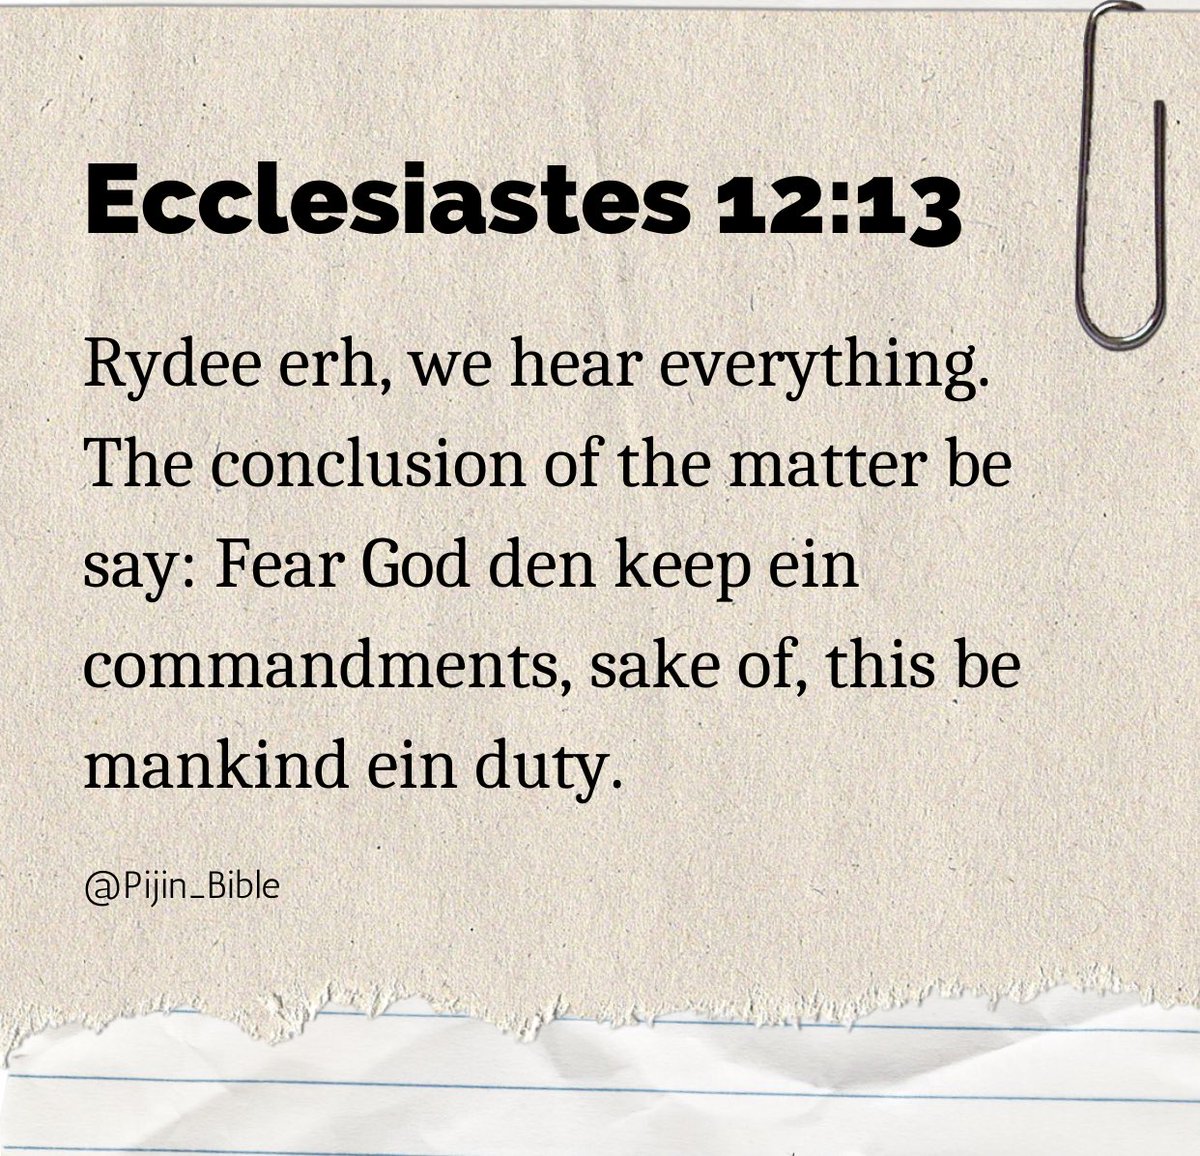 Ecclesiastes 12:13
#PijinBible